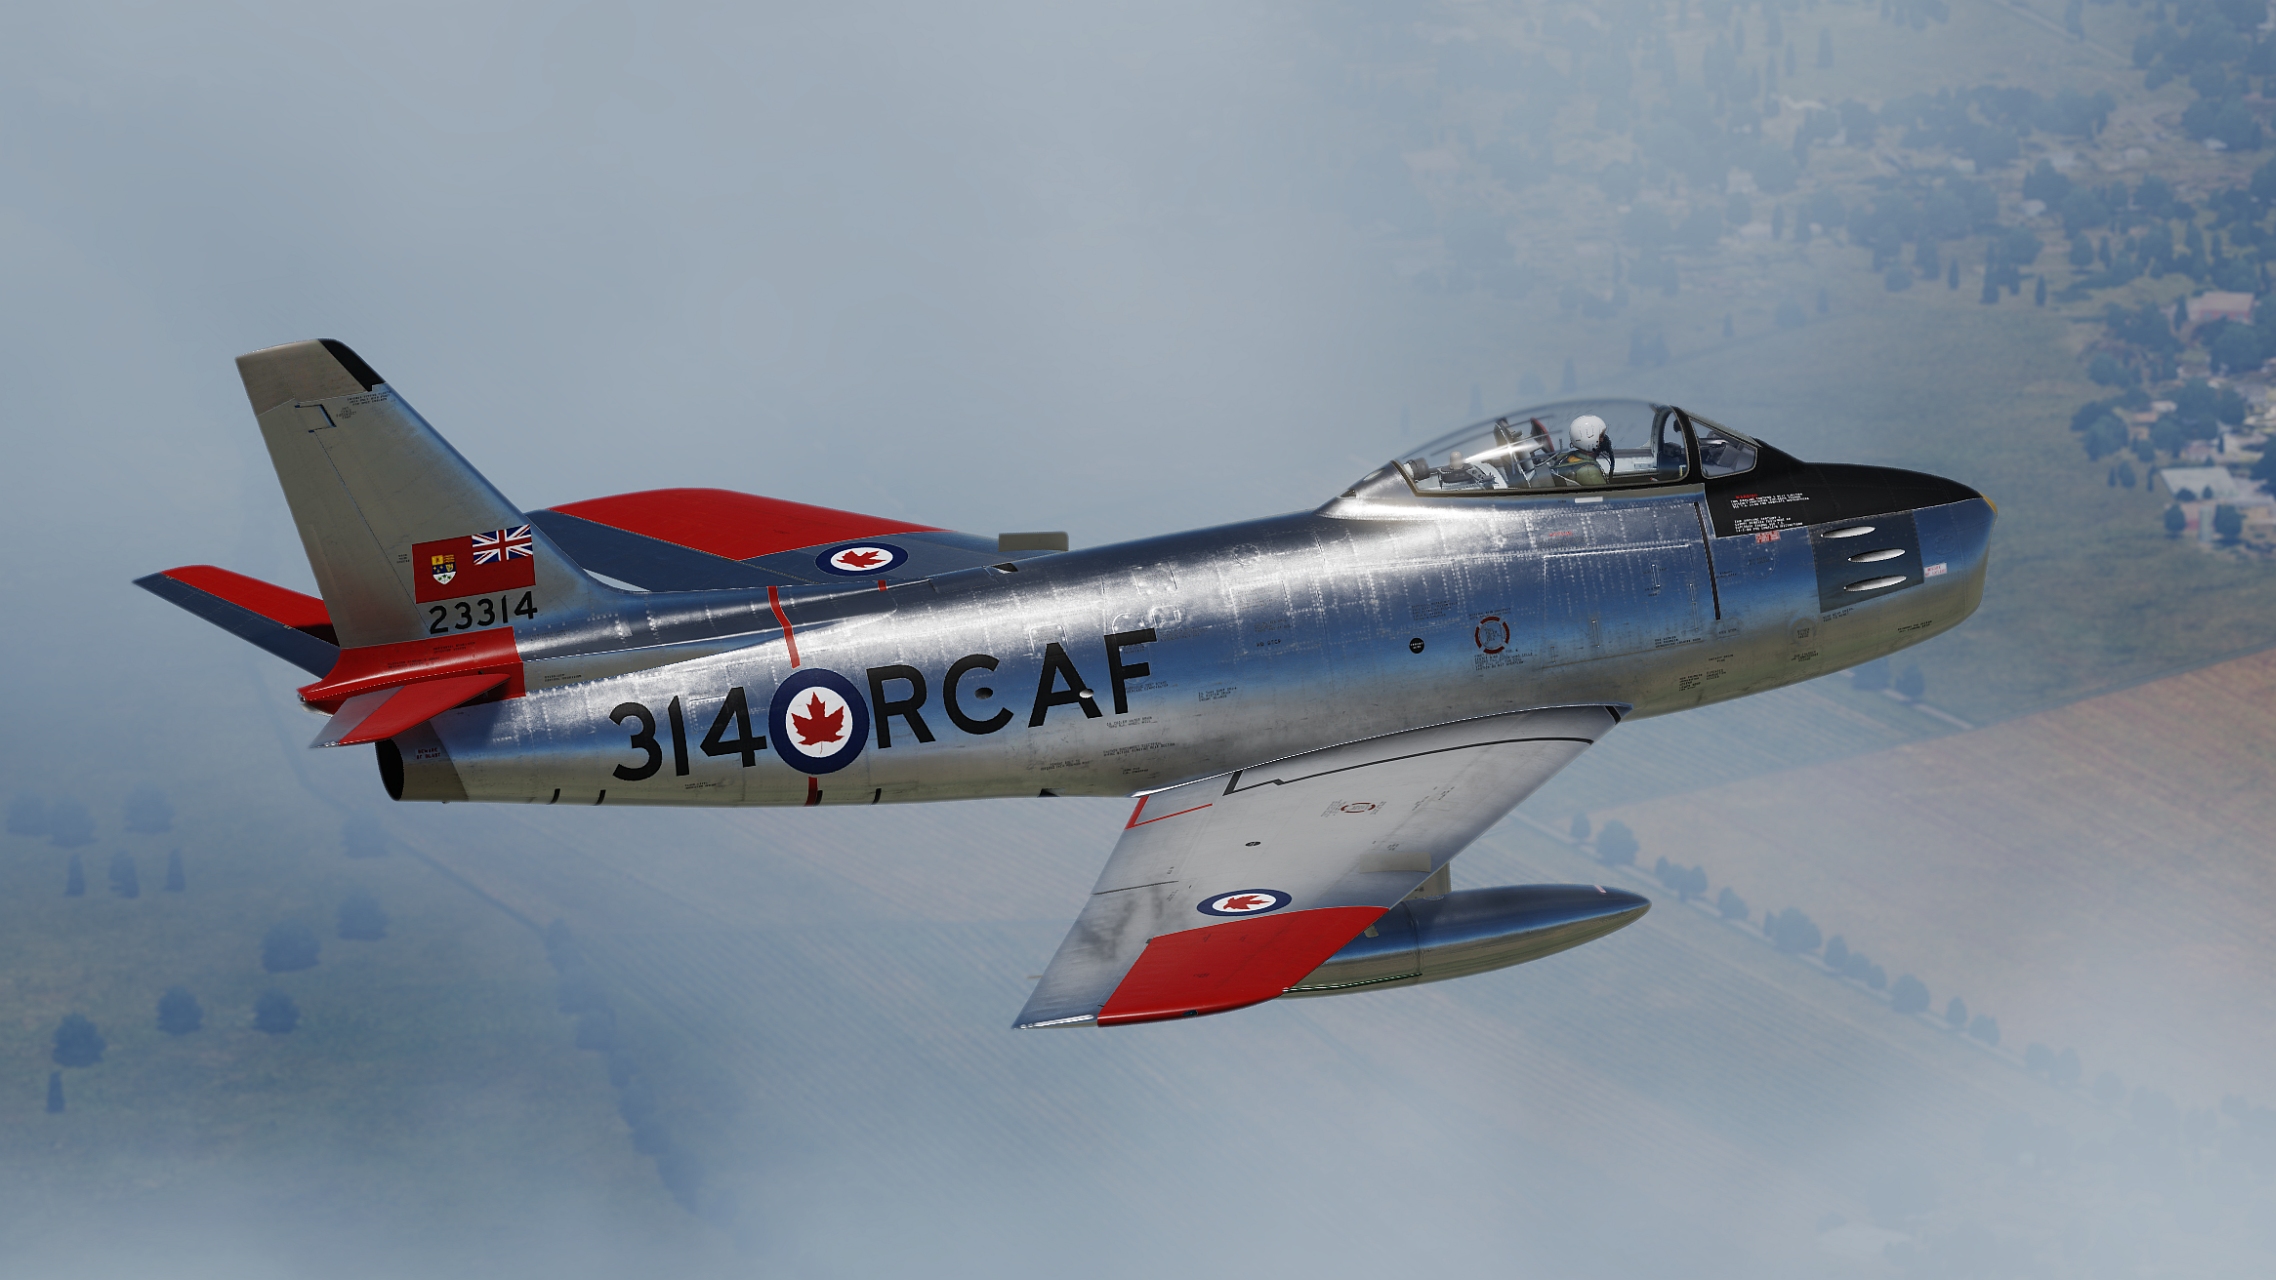 RCAF F-86 Sabre Mk. 5 23314 